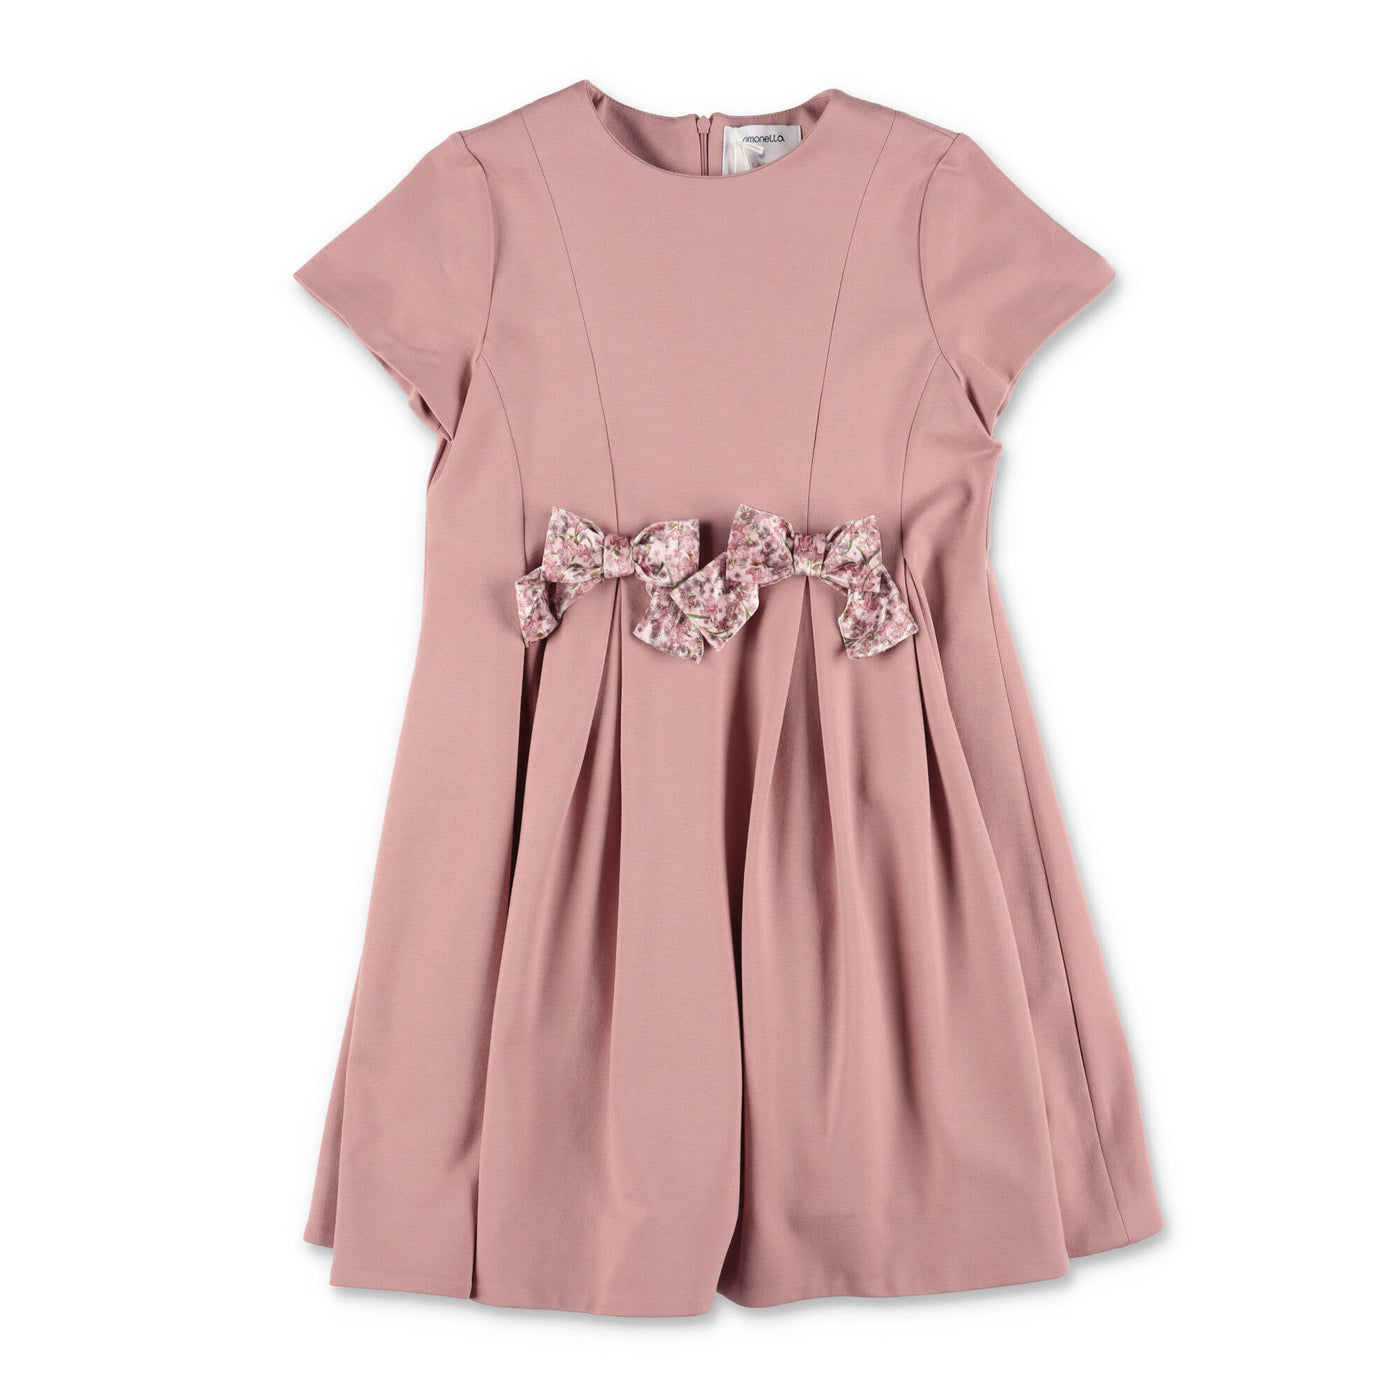 Antique pink viscose blend girl SIMONETTA dress | Carofiglio Junior